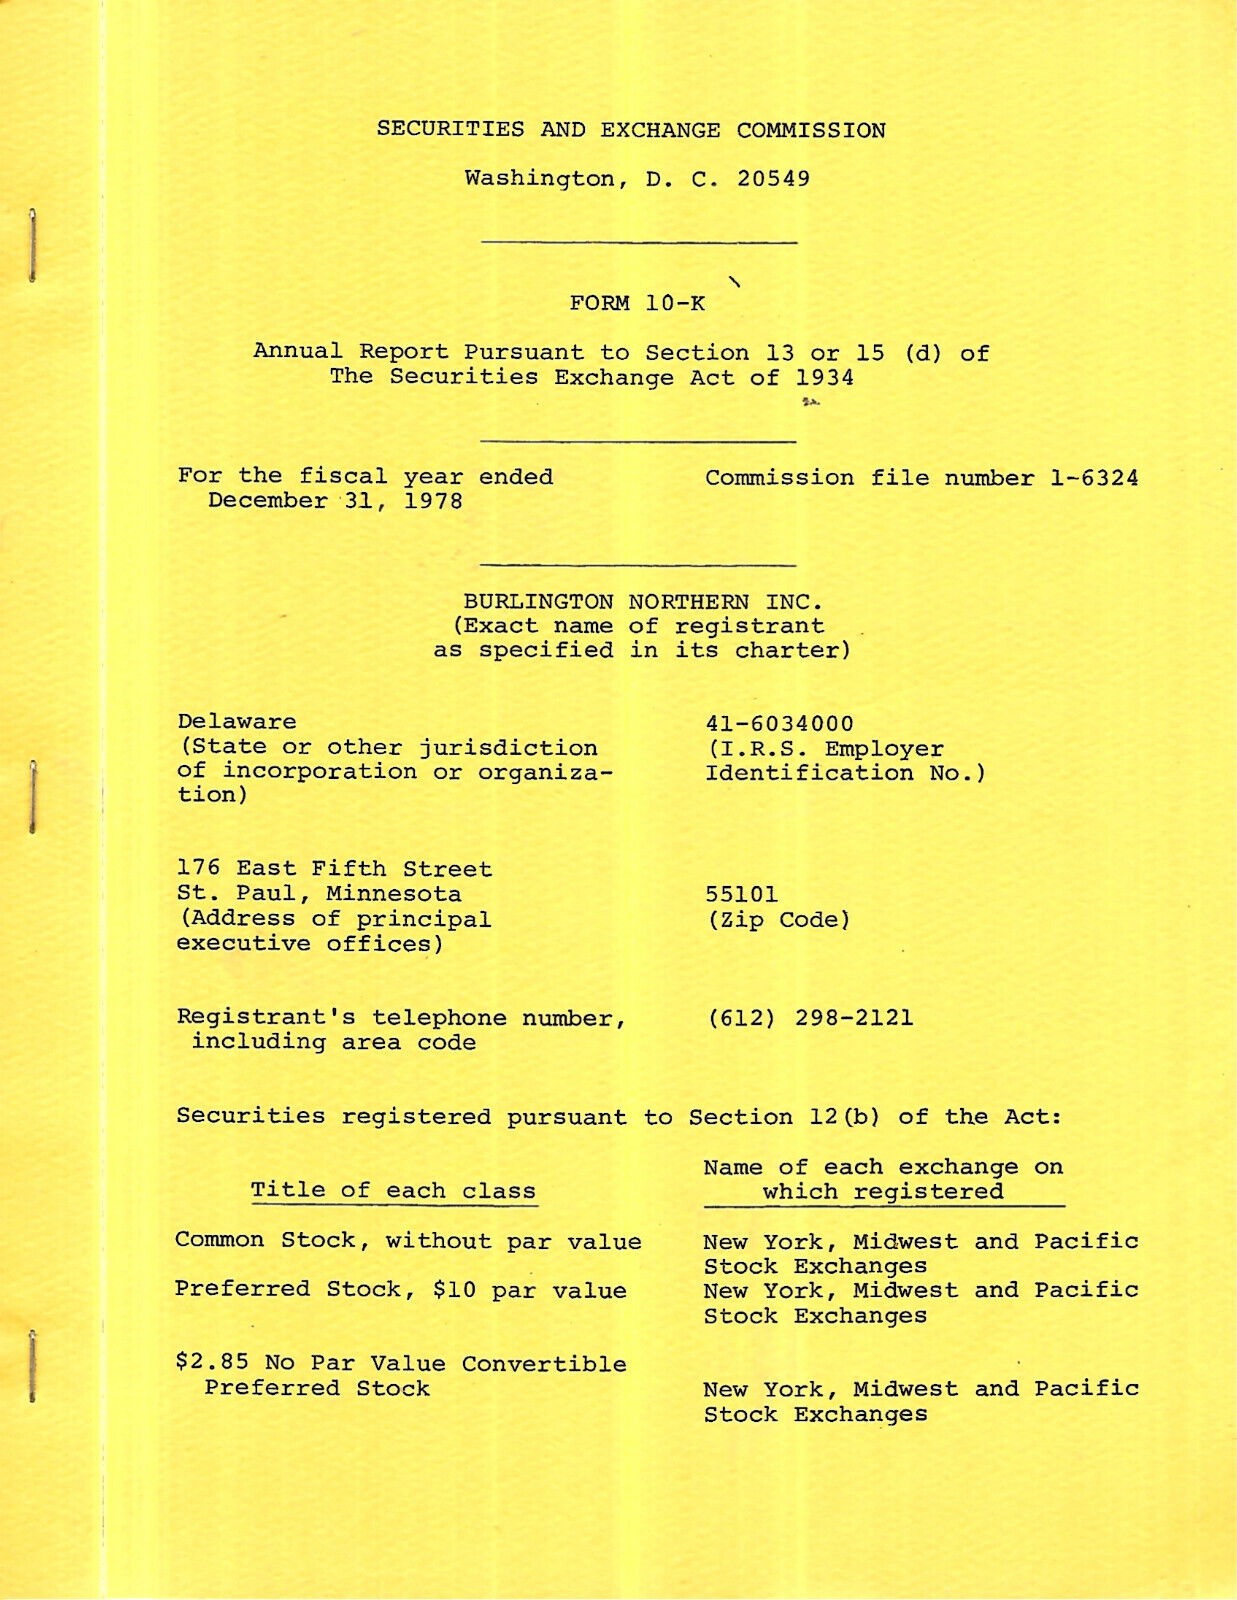 BN BURLINGTON NORTHERN INC   ANNUAL REPORT  10-K  1978